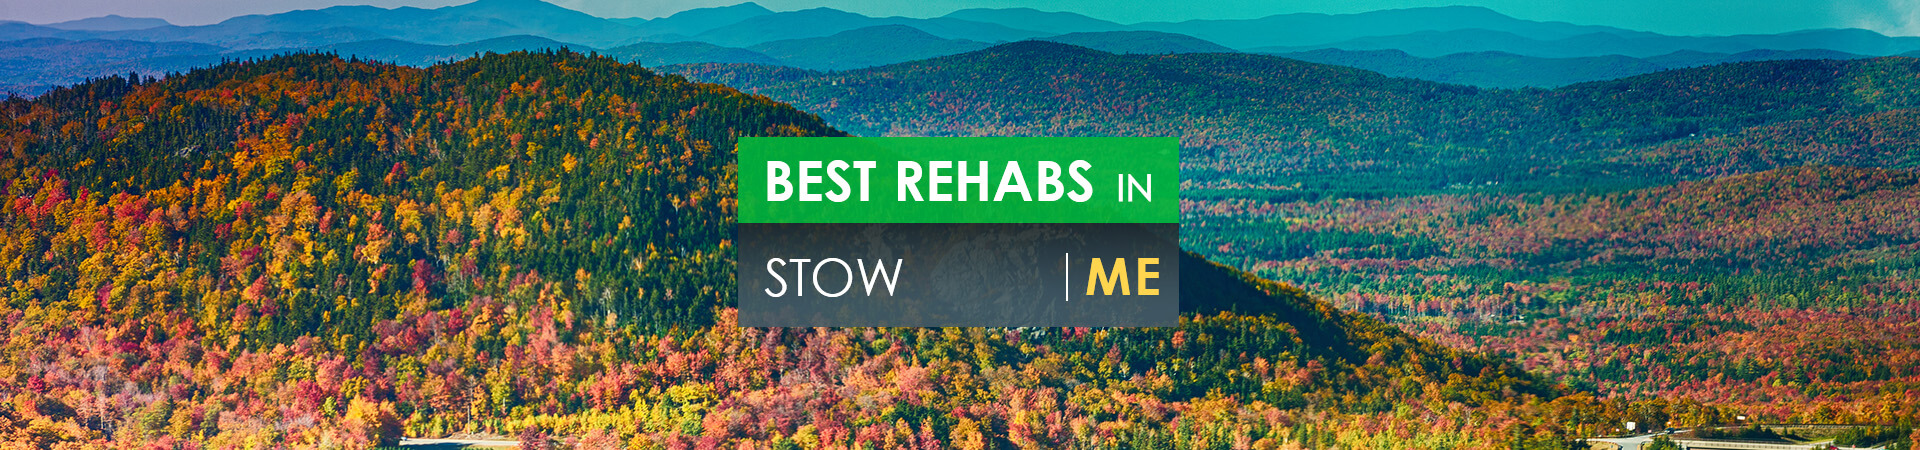 Best rehabs in Stow, ME